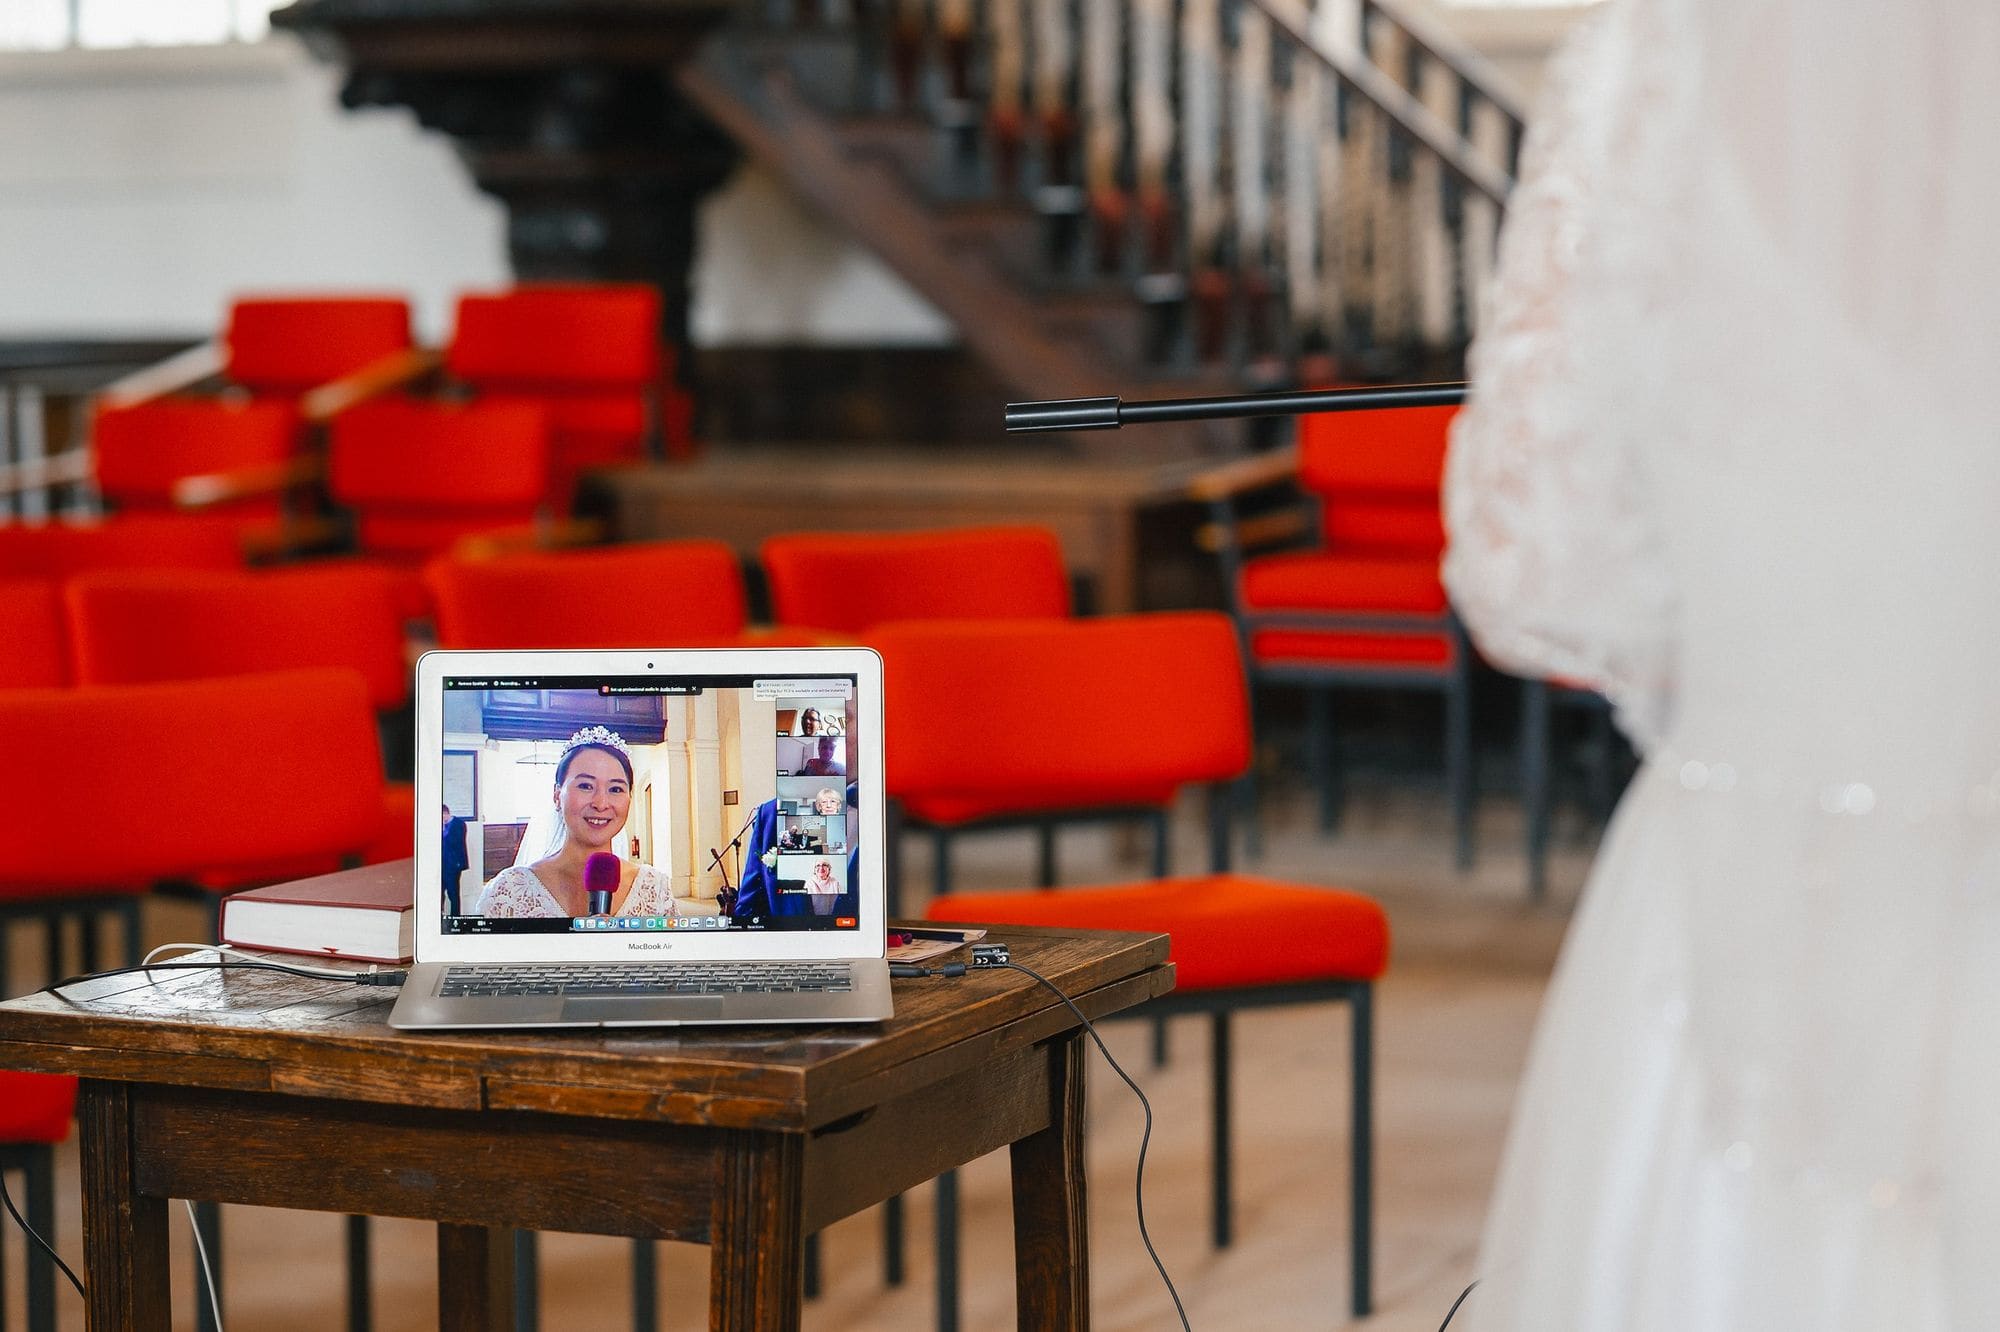 Mariko's Church Wedding: Getting Married During COVID